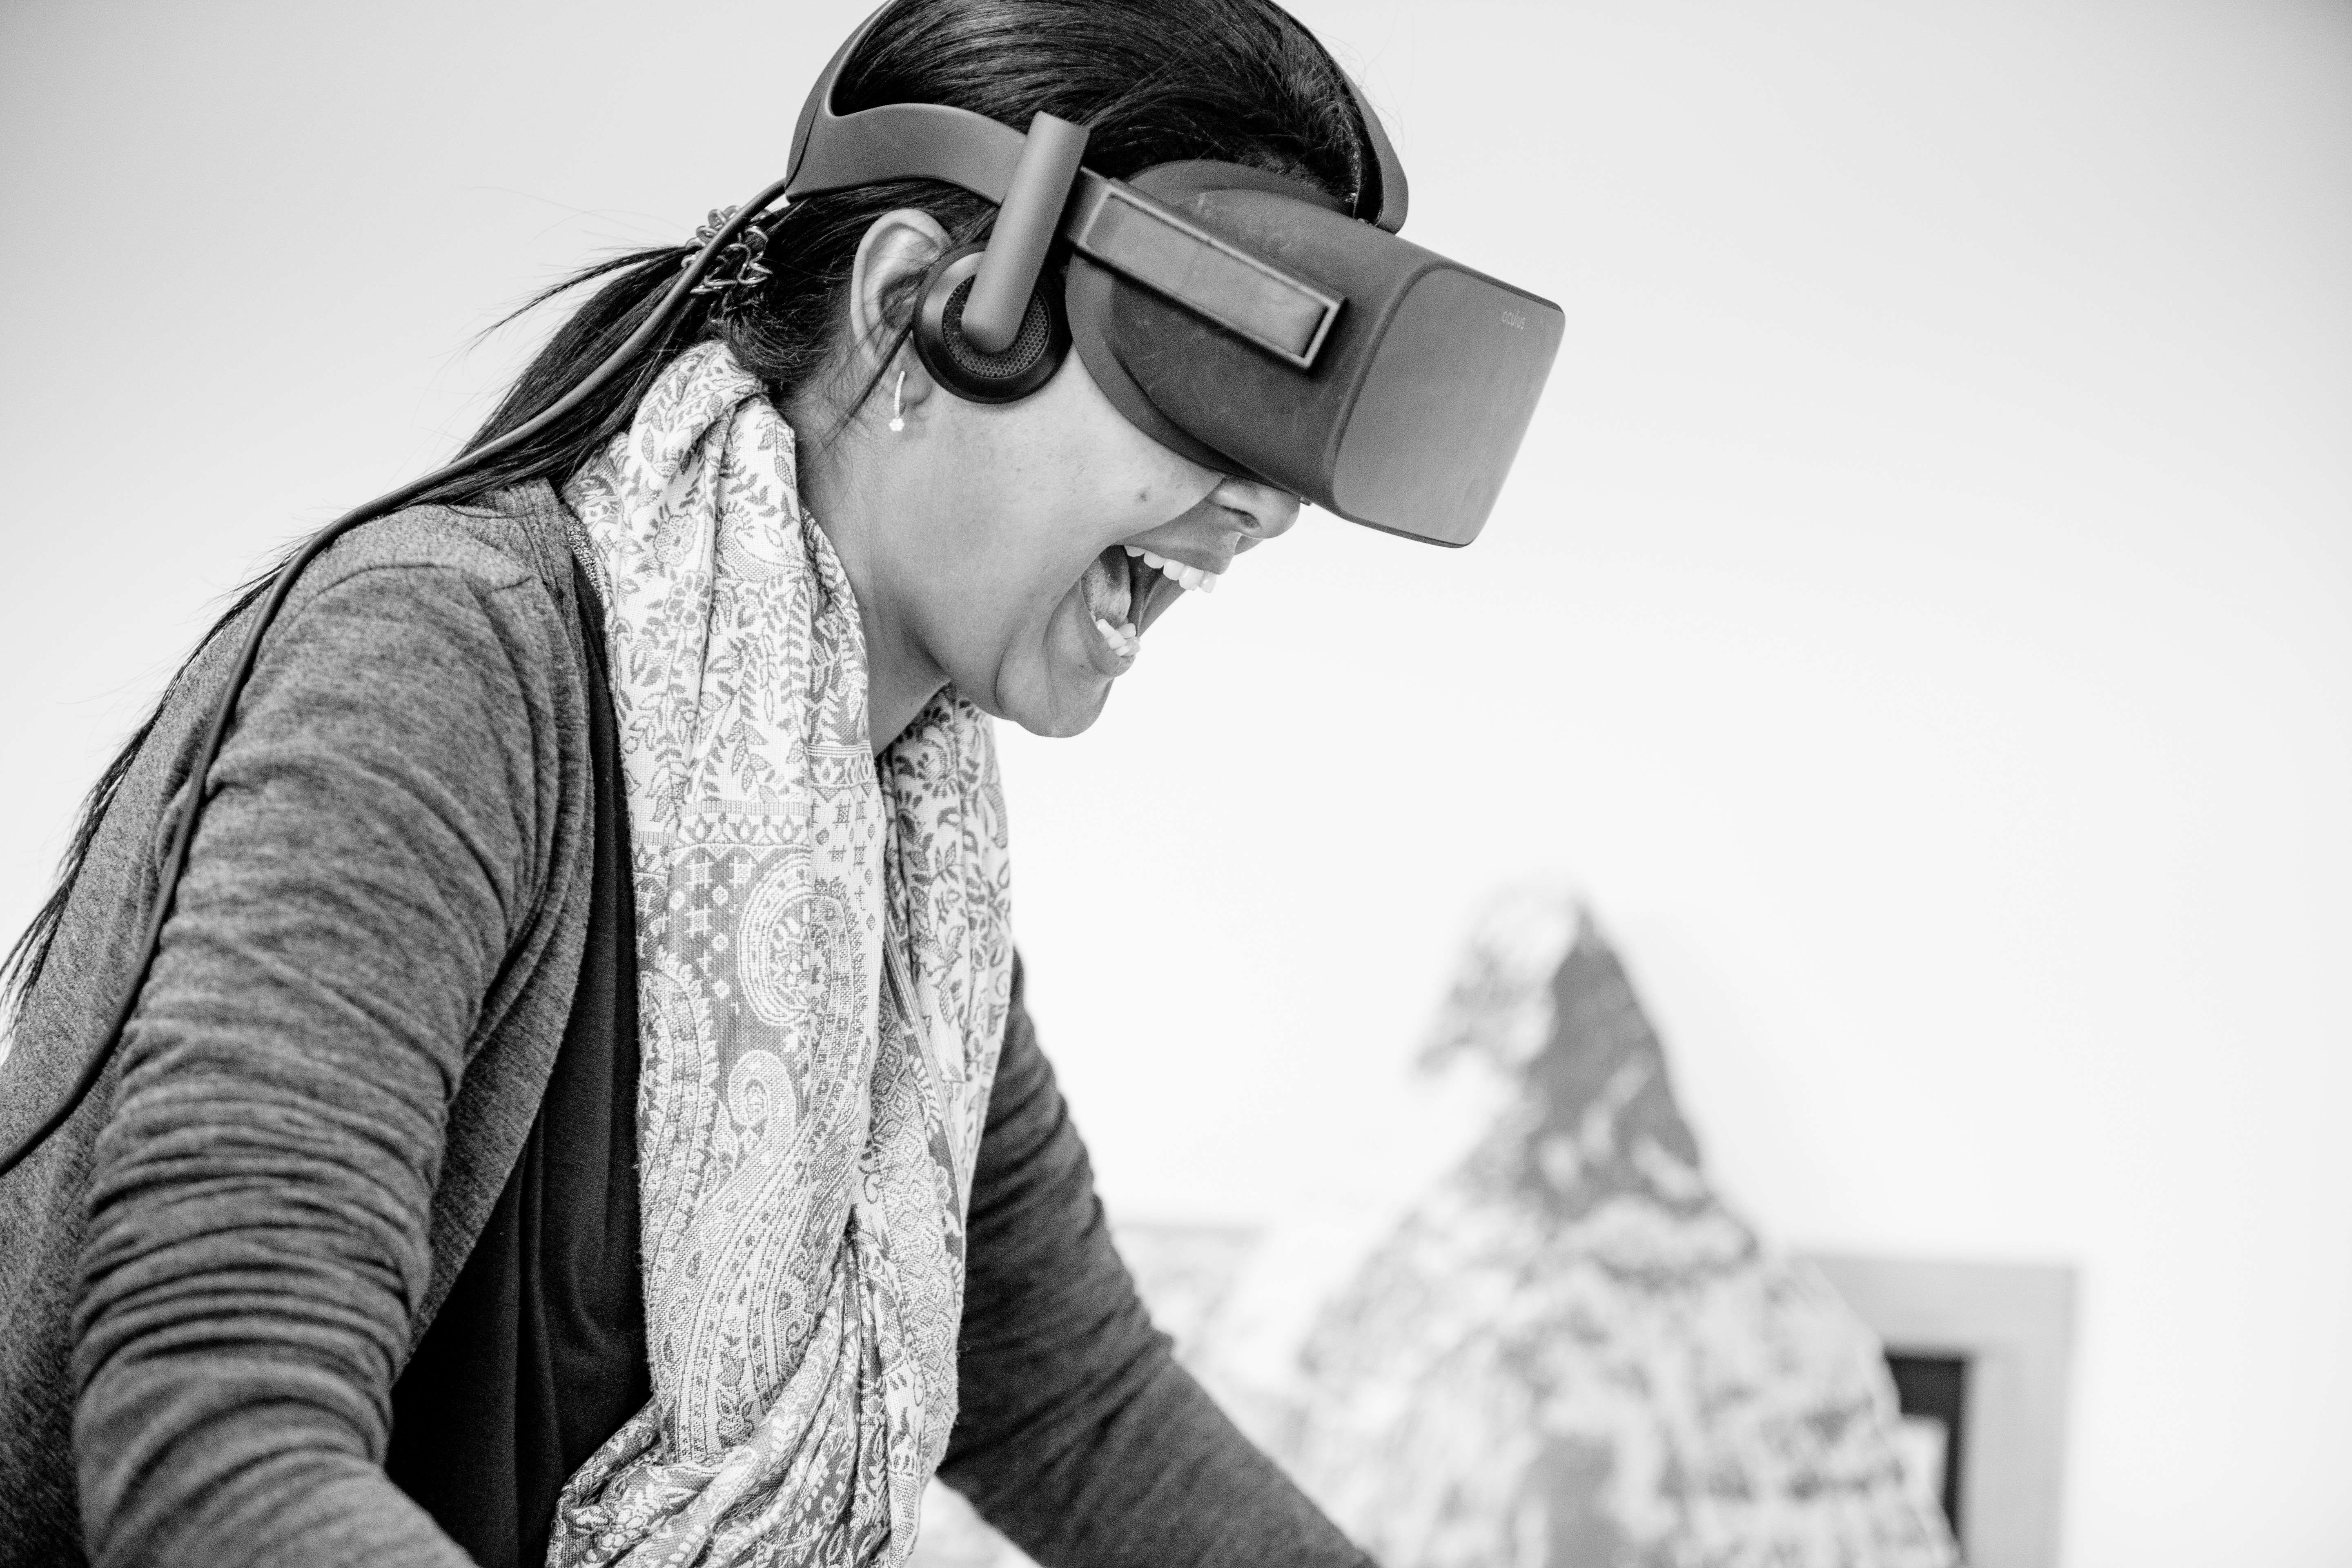 Virtual Reality Skiing Event